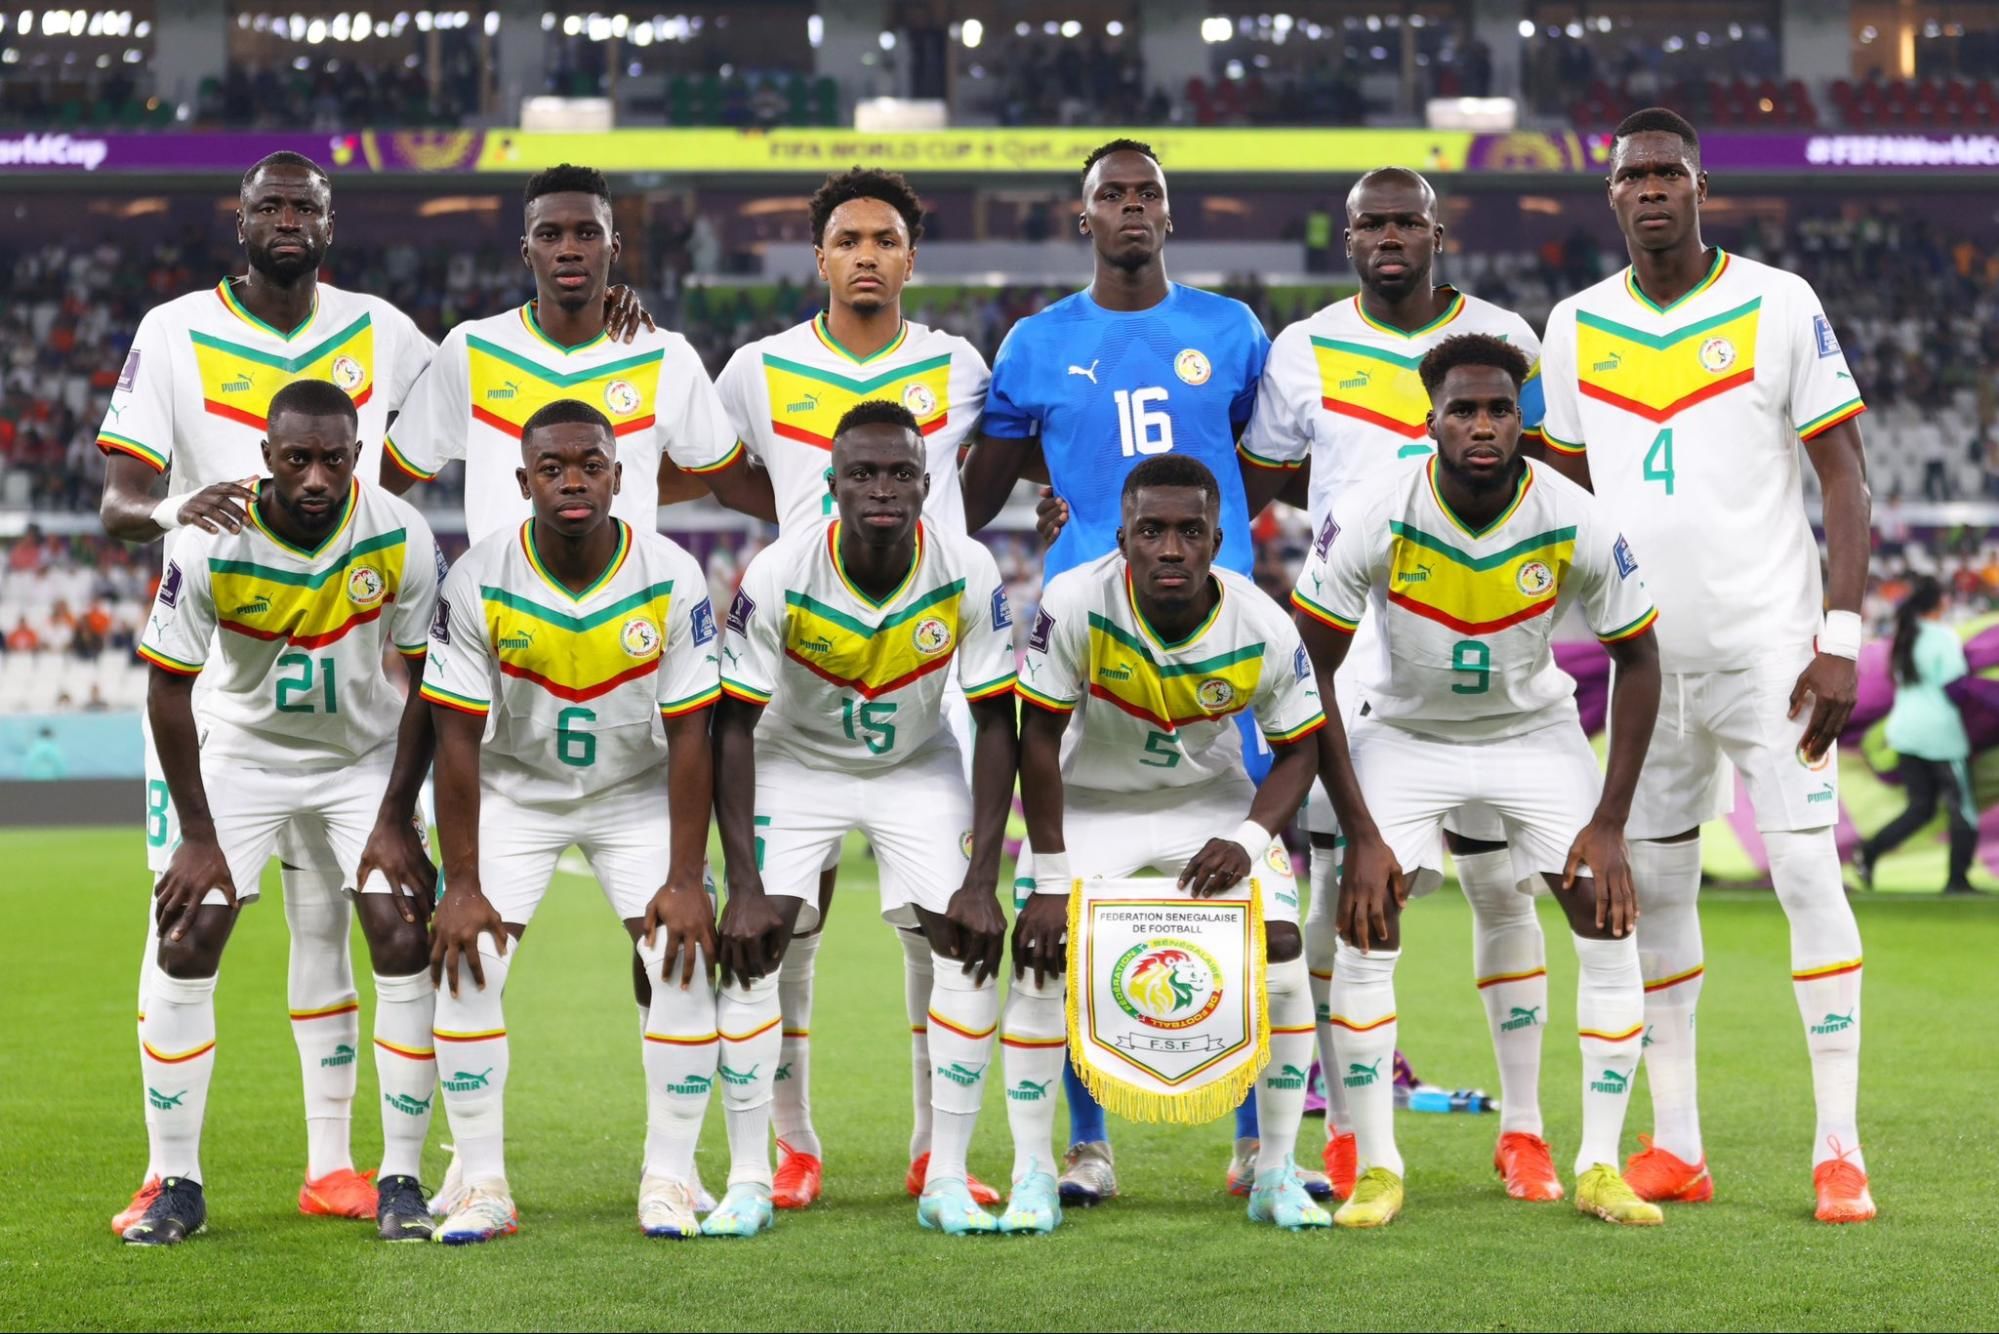 Senegal national team in Qatar 2022 World Cup